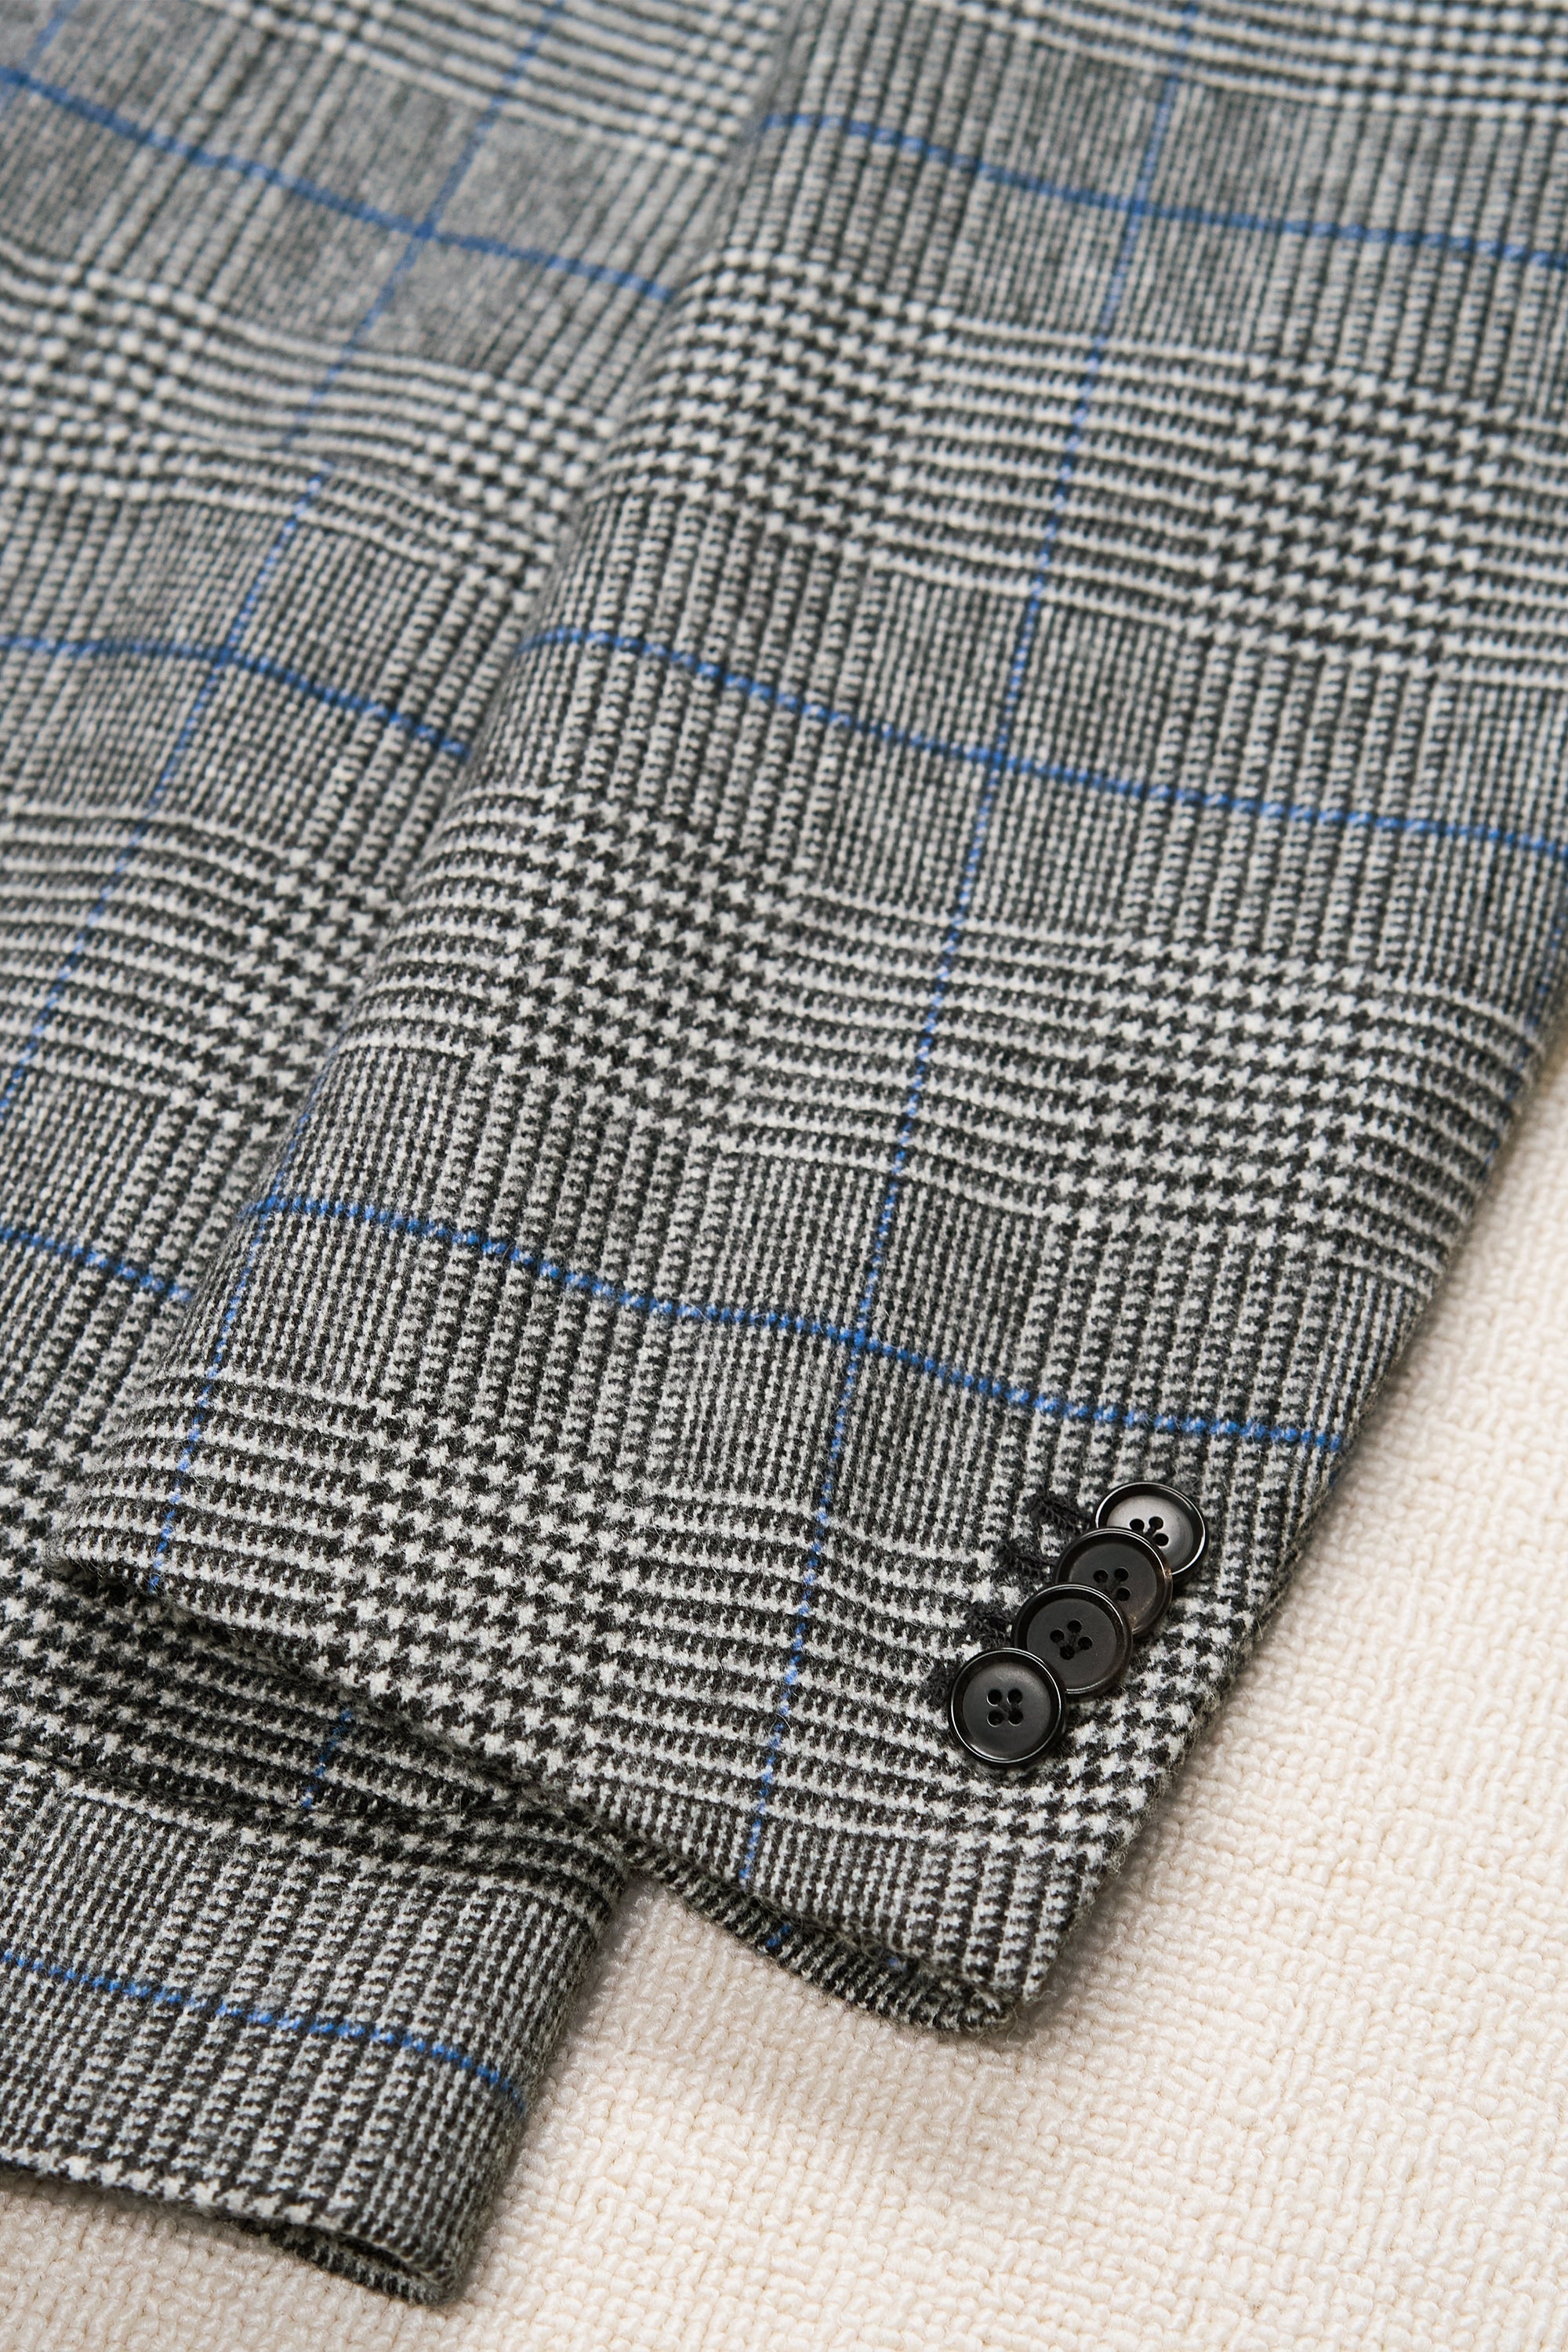 Casa Del Sarto Black/White/Blue Prince of Wales Check Wool Sport Coat